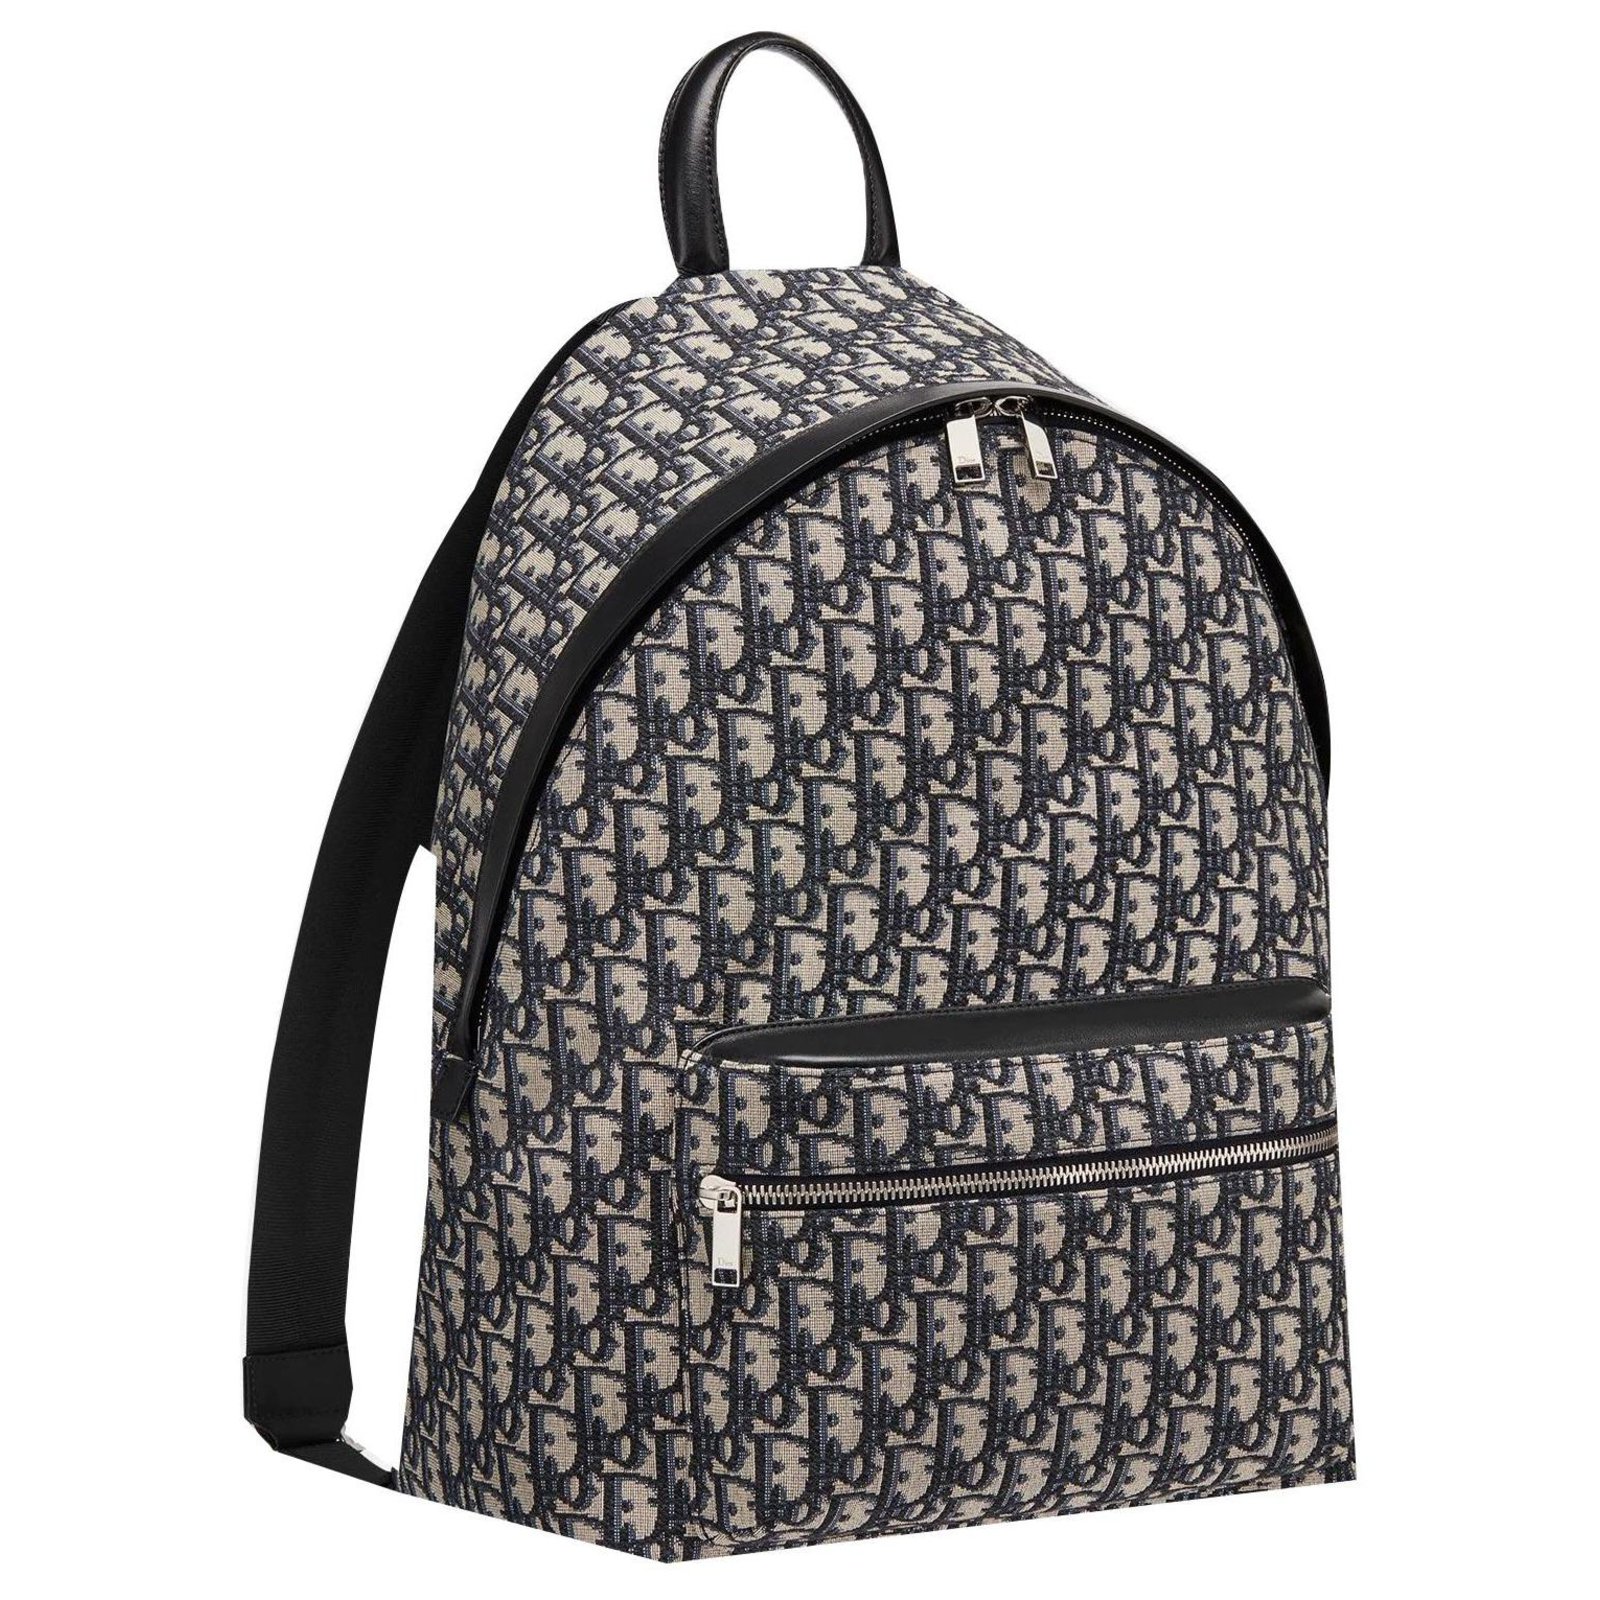 Dior Backpack Top Sellers, 51% OFF | www.ingeniovirtual.com